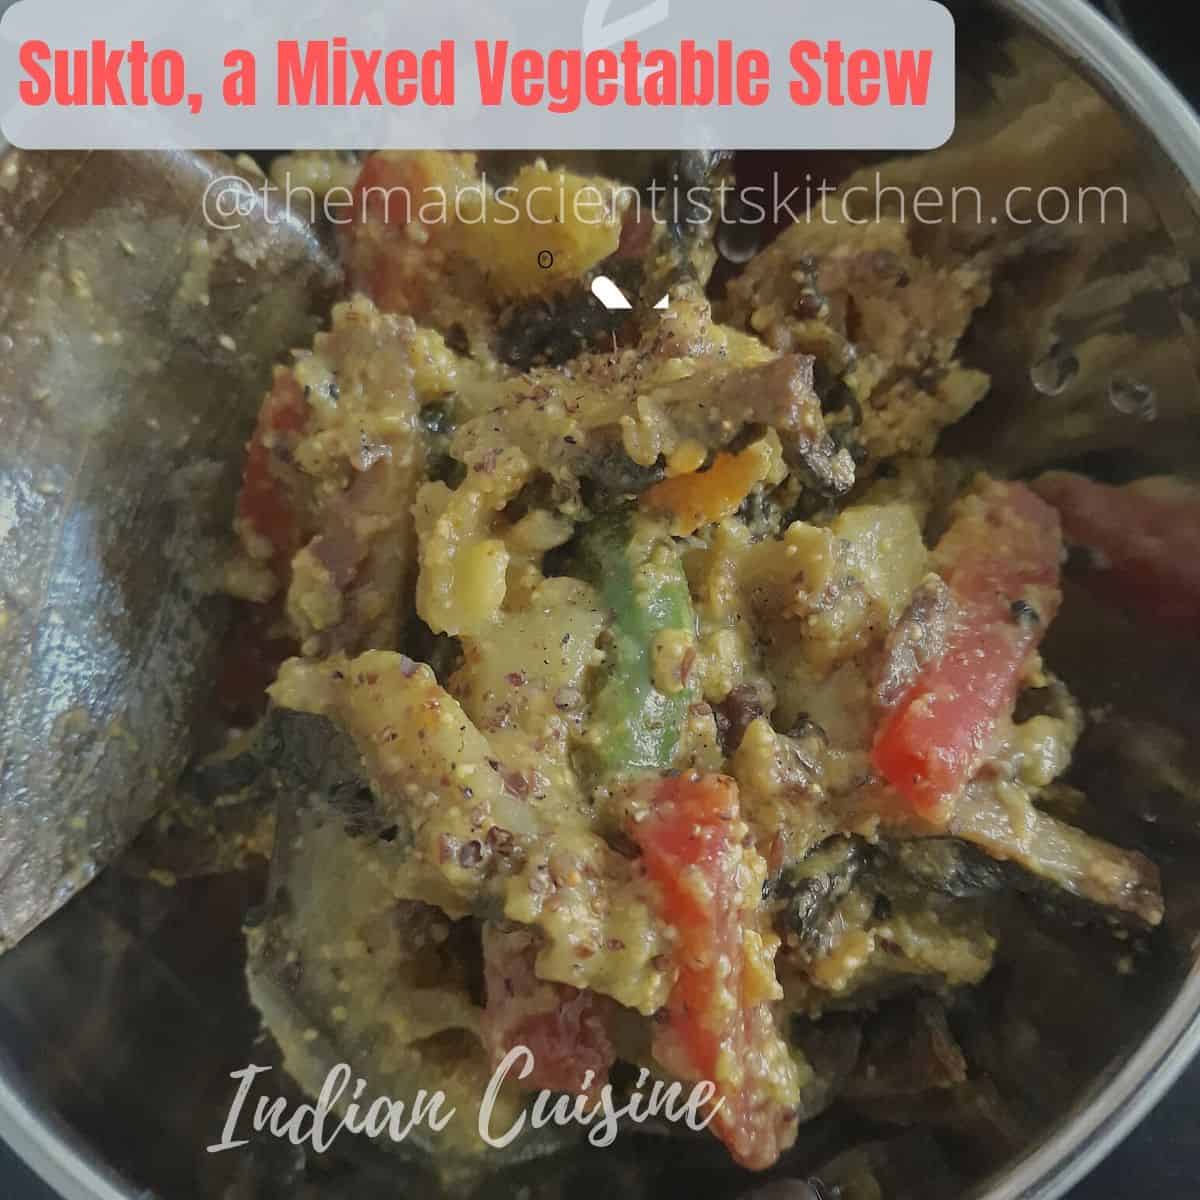 A bowl of Bengali Suktho